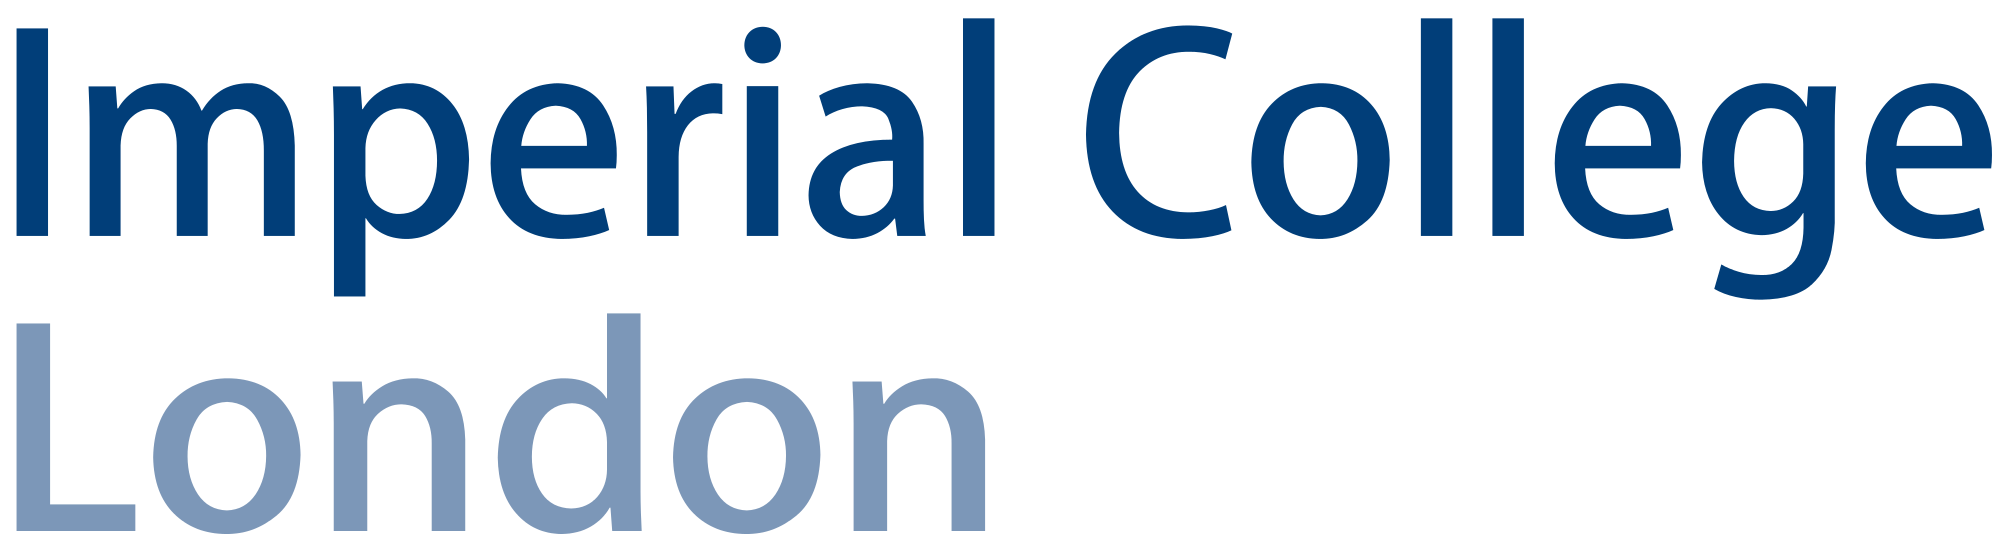 ICL Logo